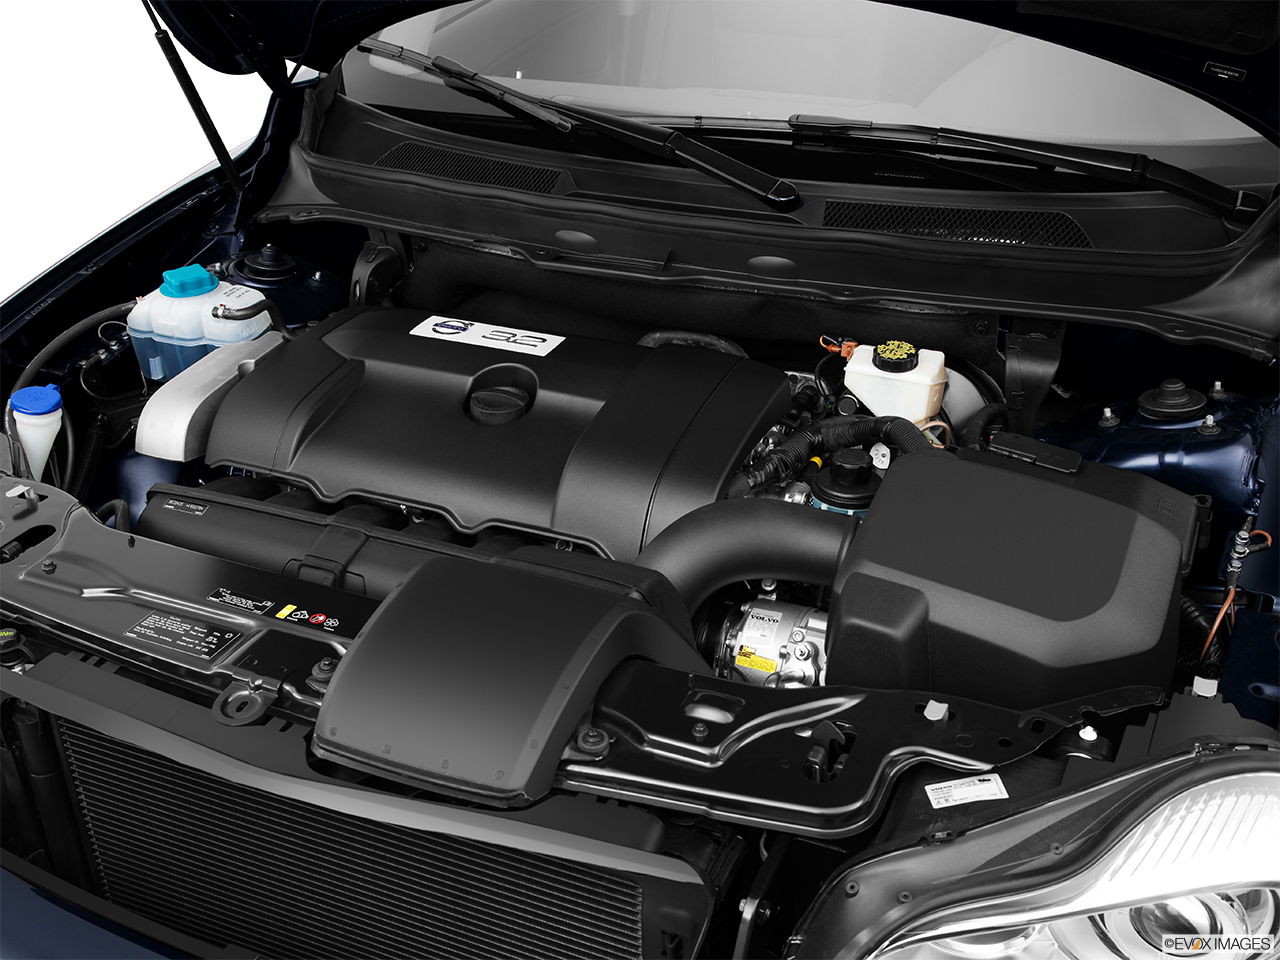 2014 Volvo XC90 3.2 FWD Premier Plus Engine. 